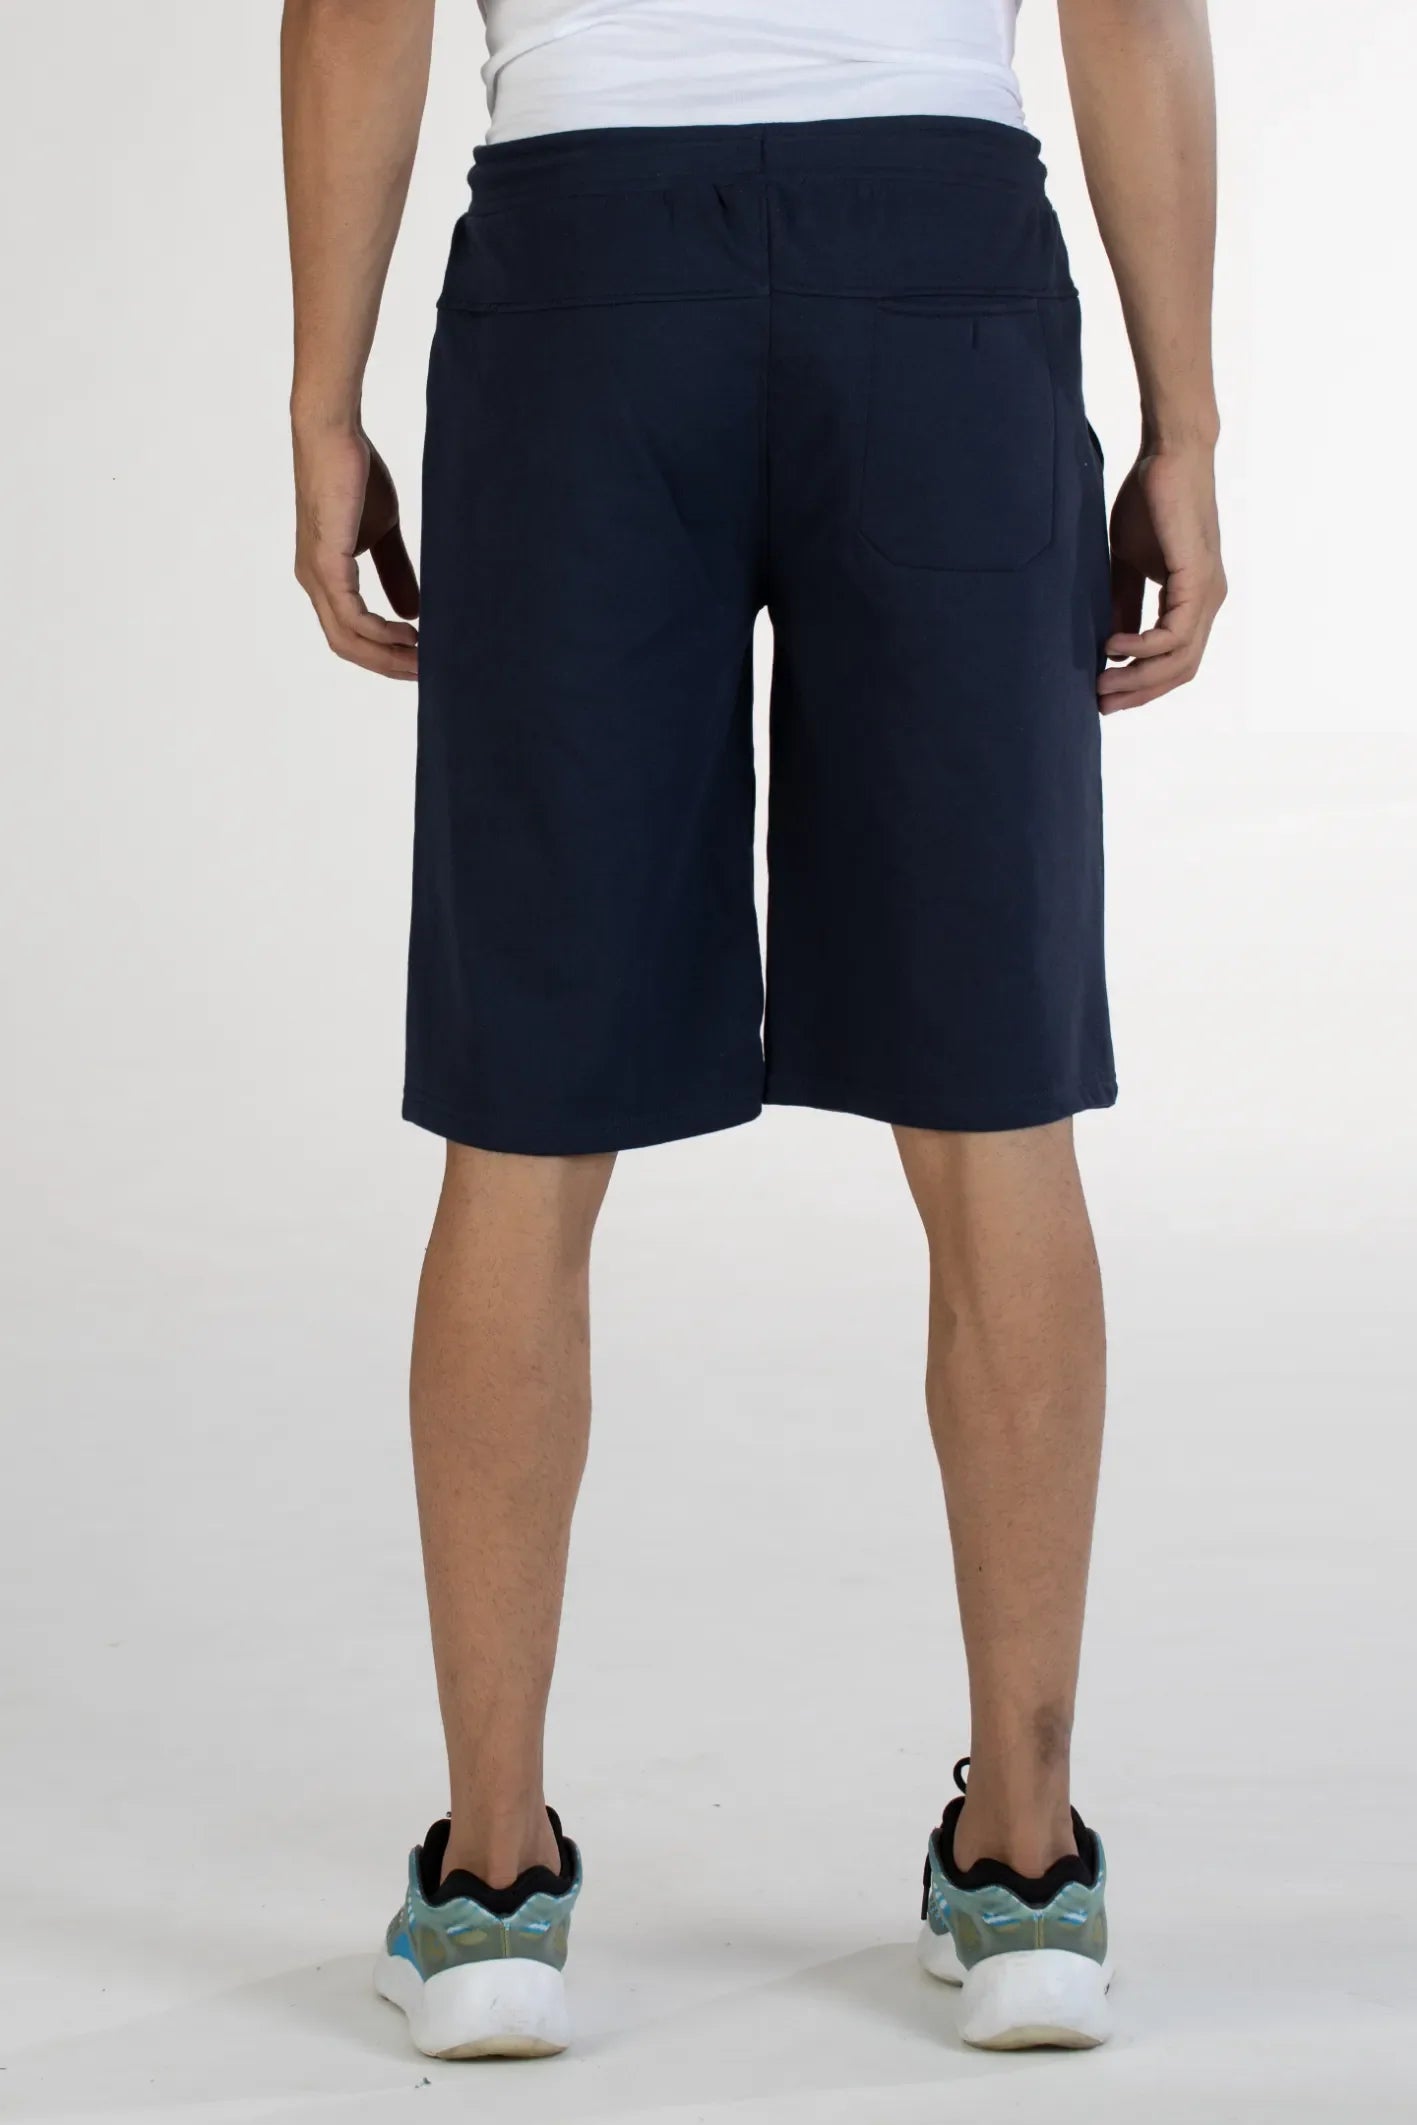 Navy solid knit cotton men's shorts